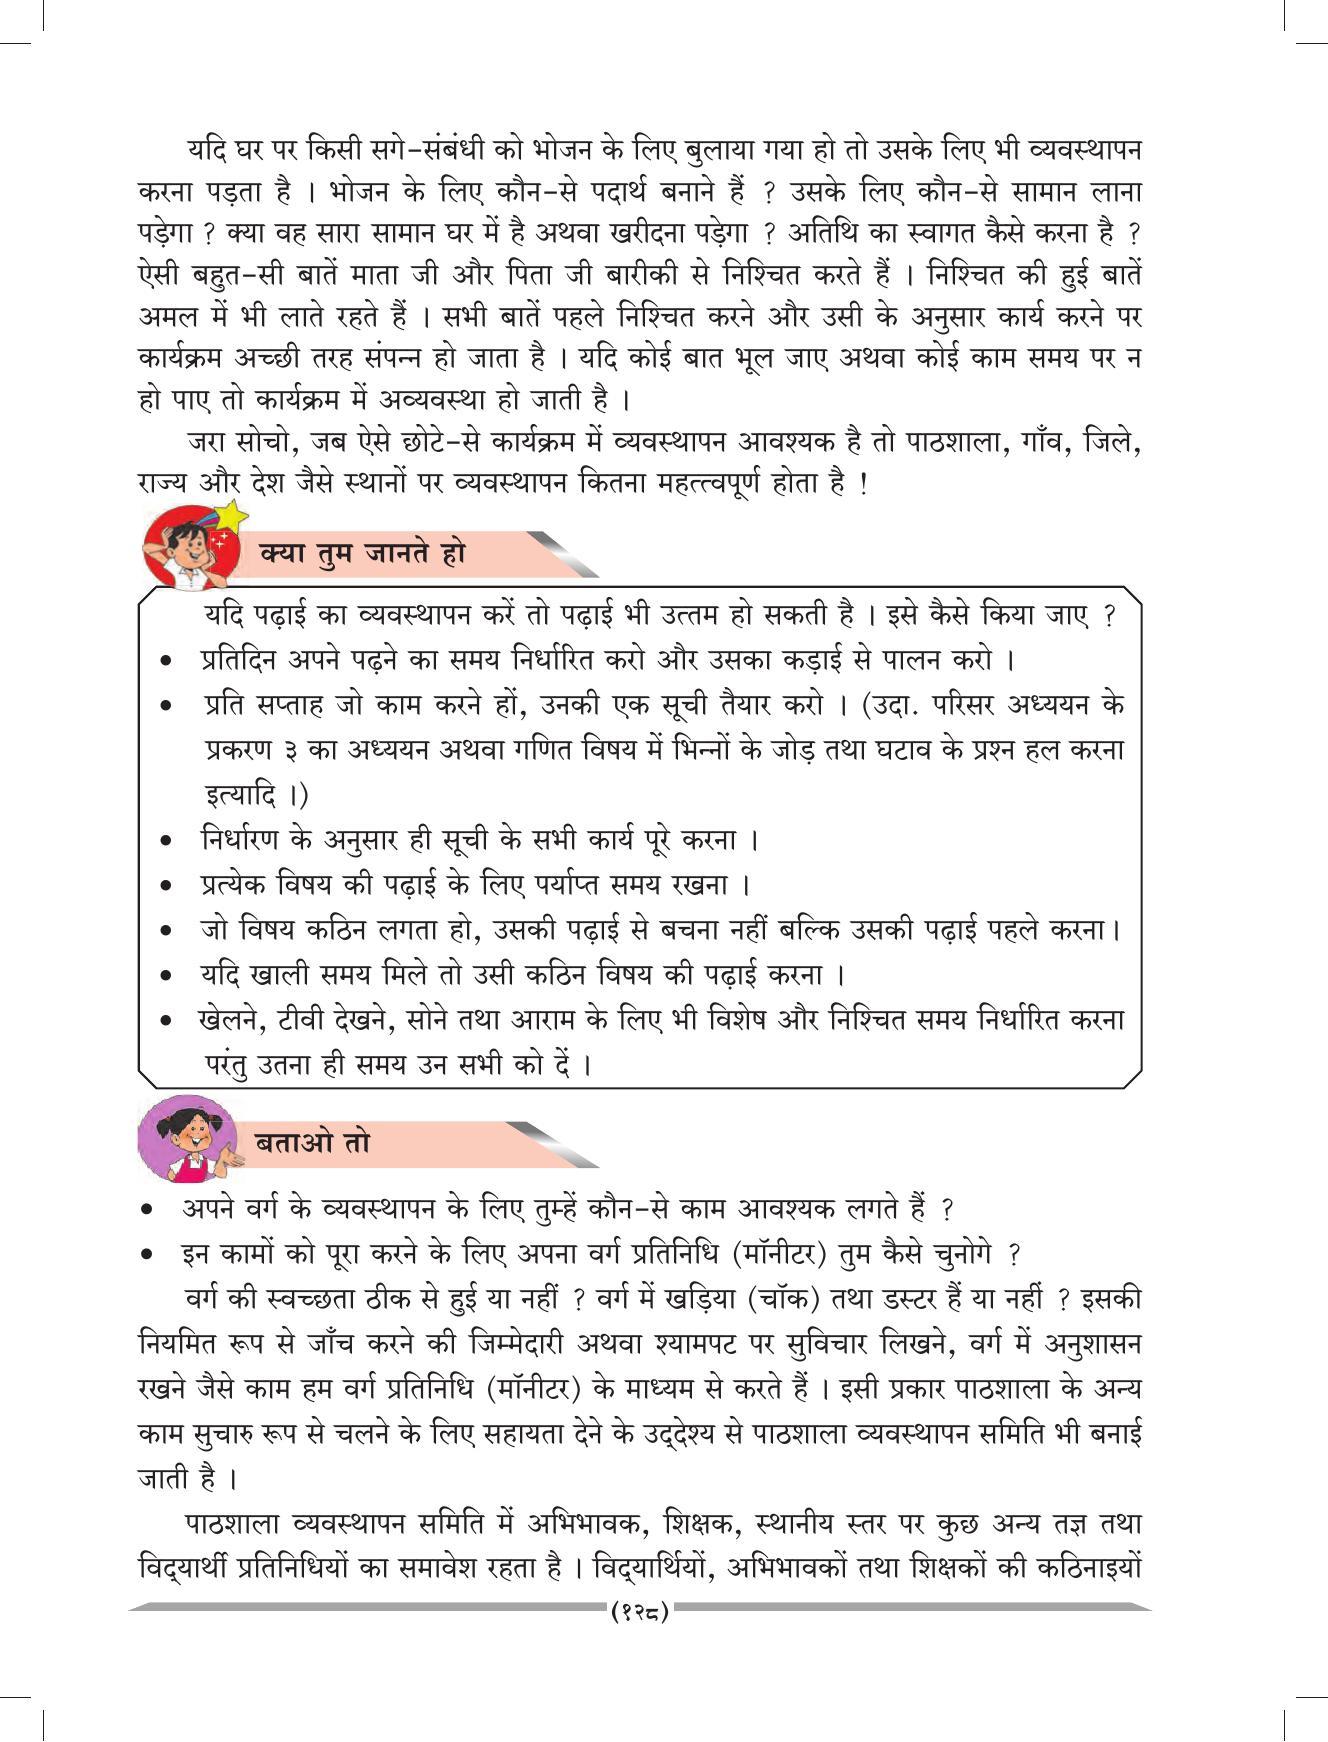 Maharashtra Board Class 4 EVS 1 (Hindi Medium) Textbook - Page 138